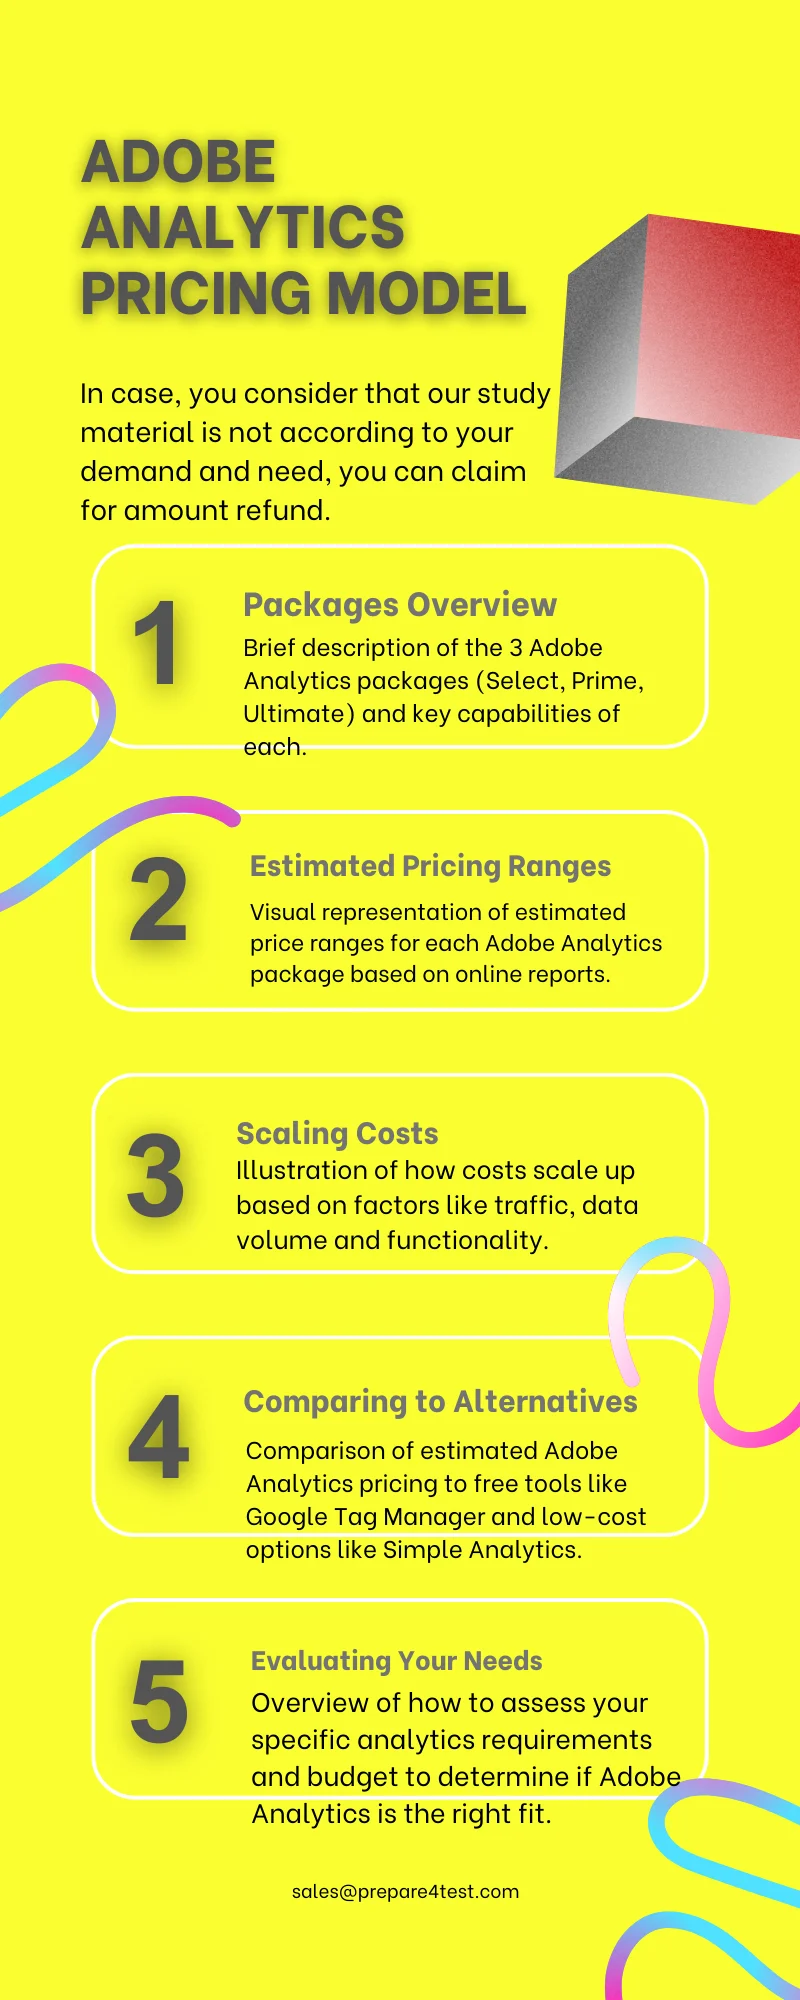 Adobe Analytics Pricing Model Infographic